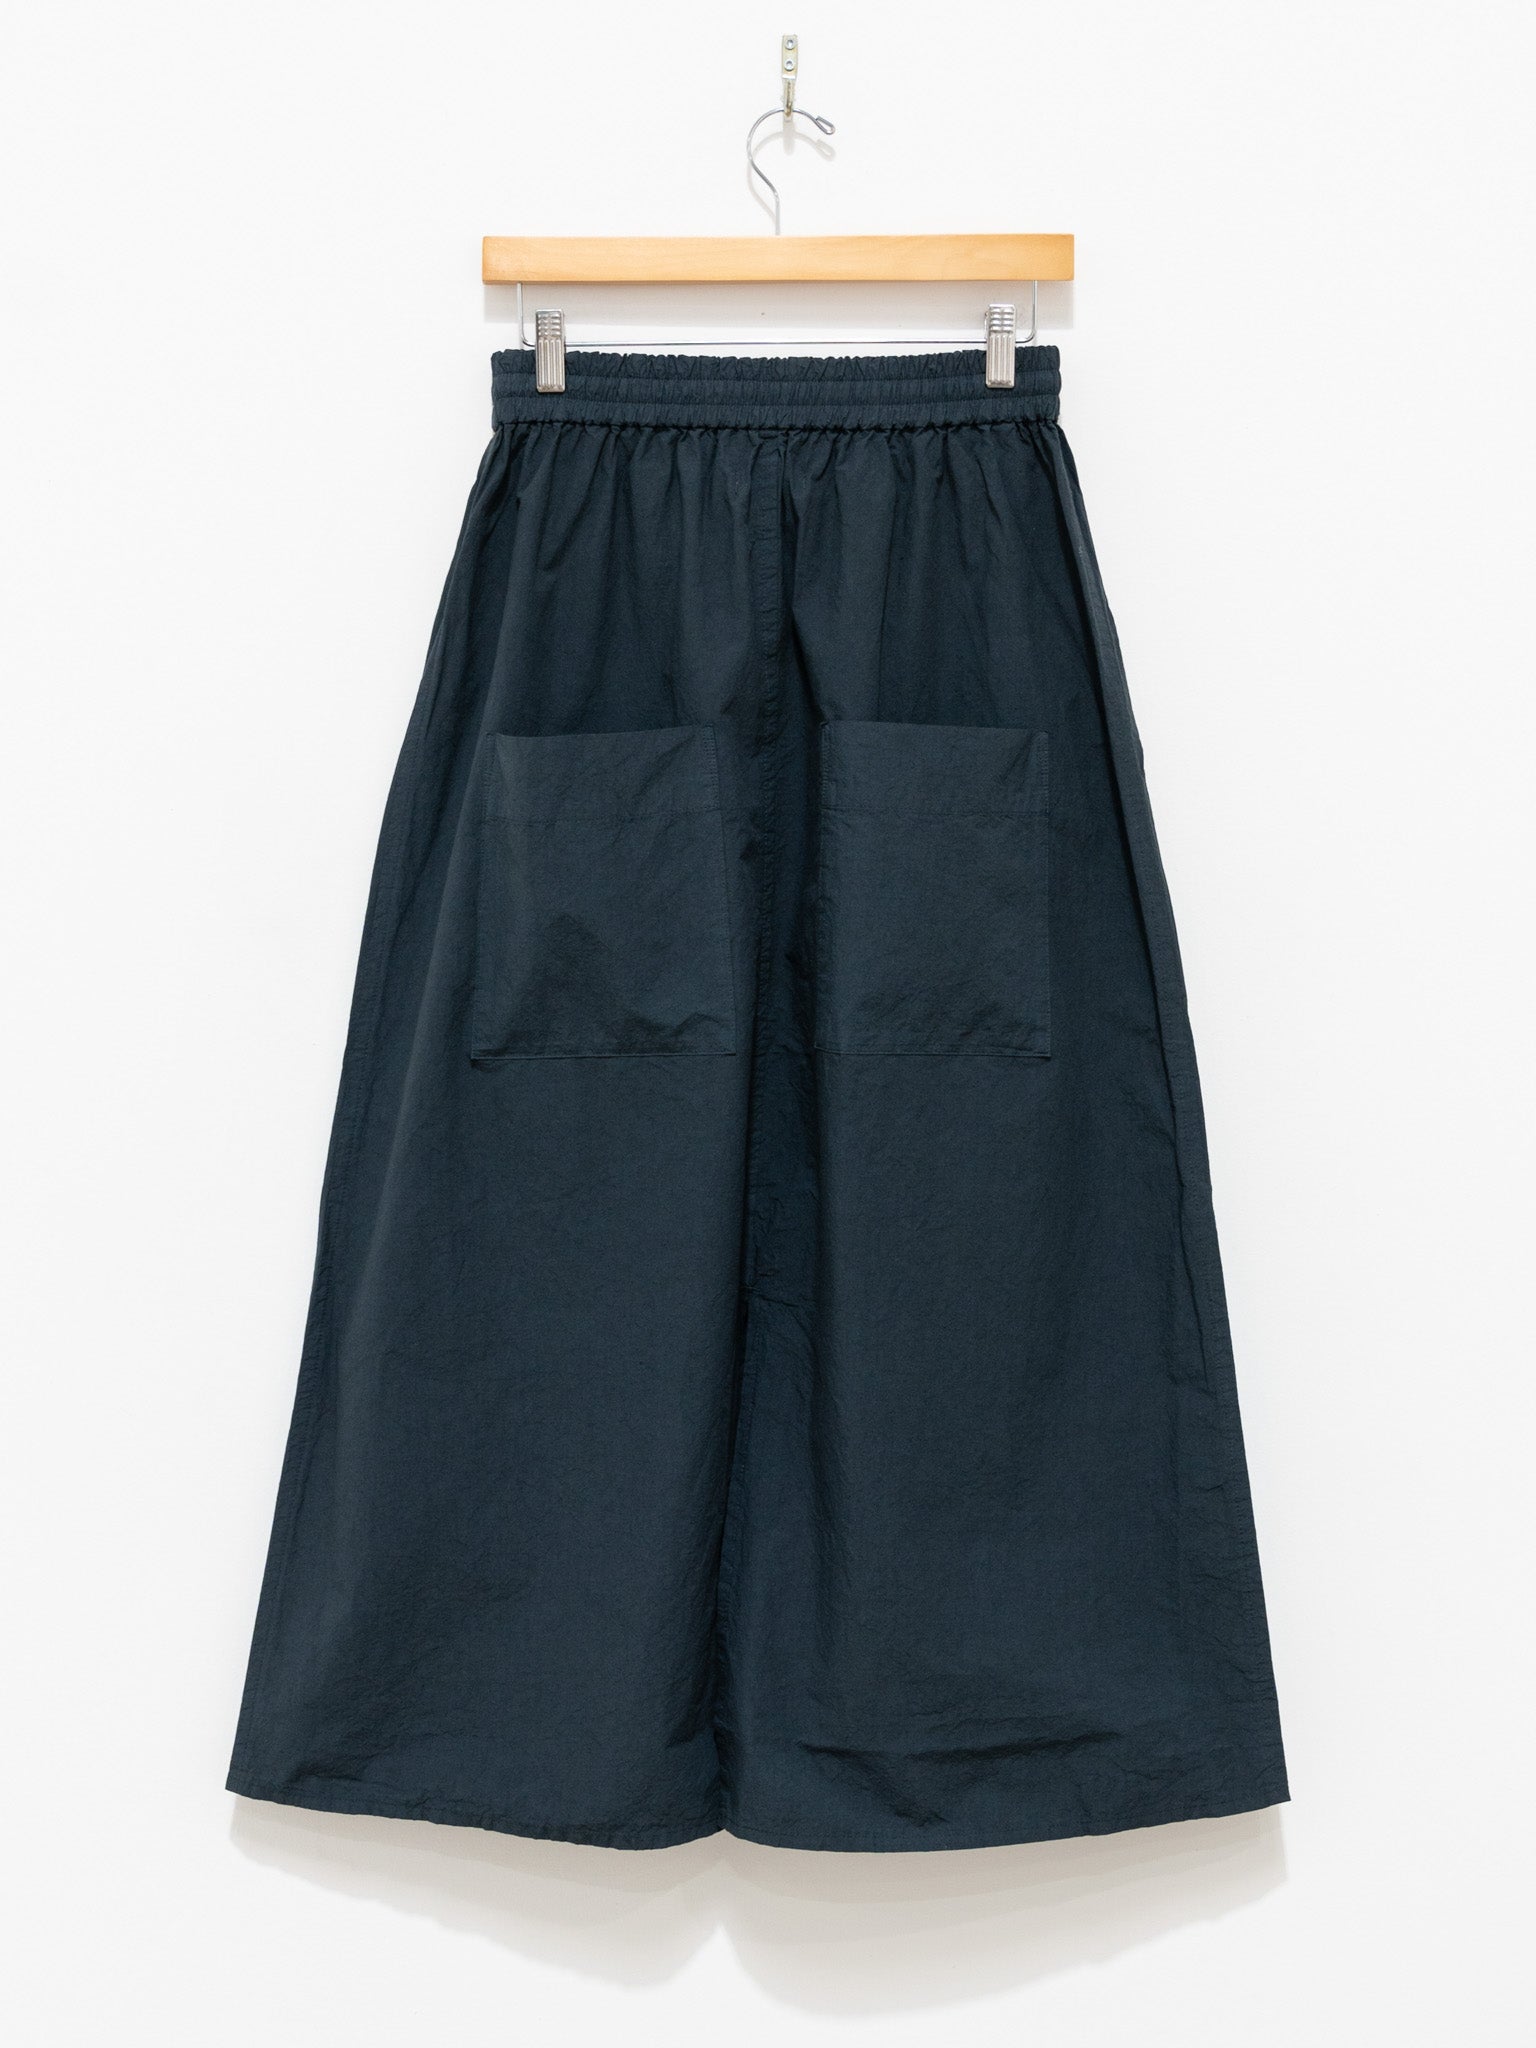 Namu Shop - Veritecoeur Gathered Skirt - Sumi Black